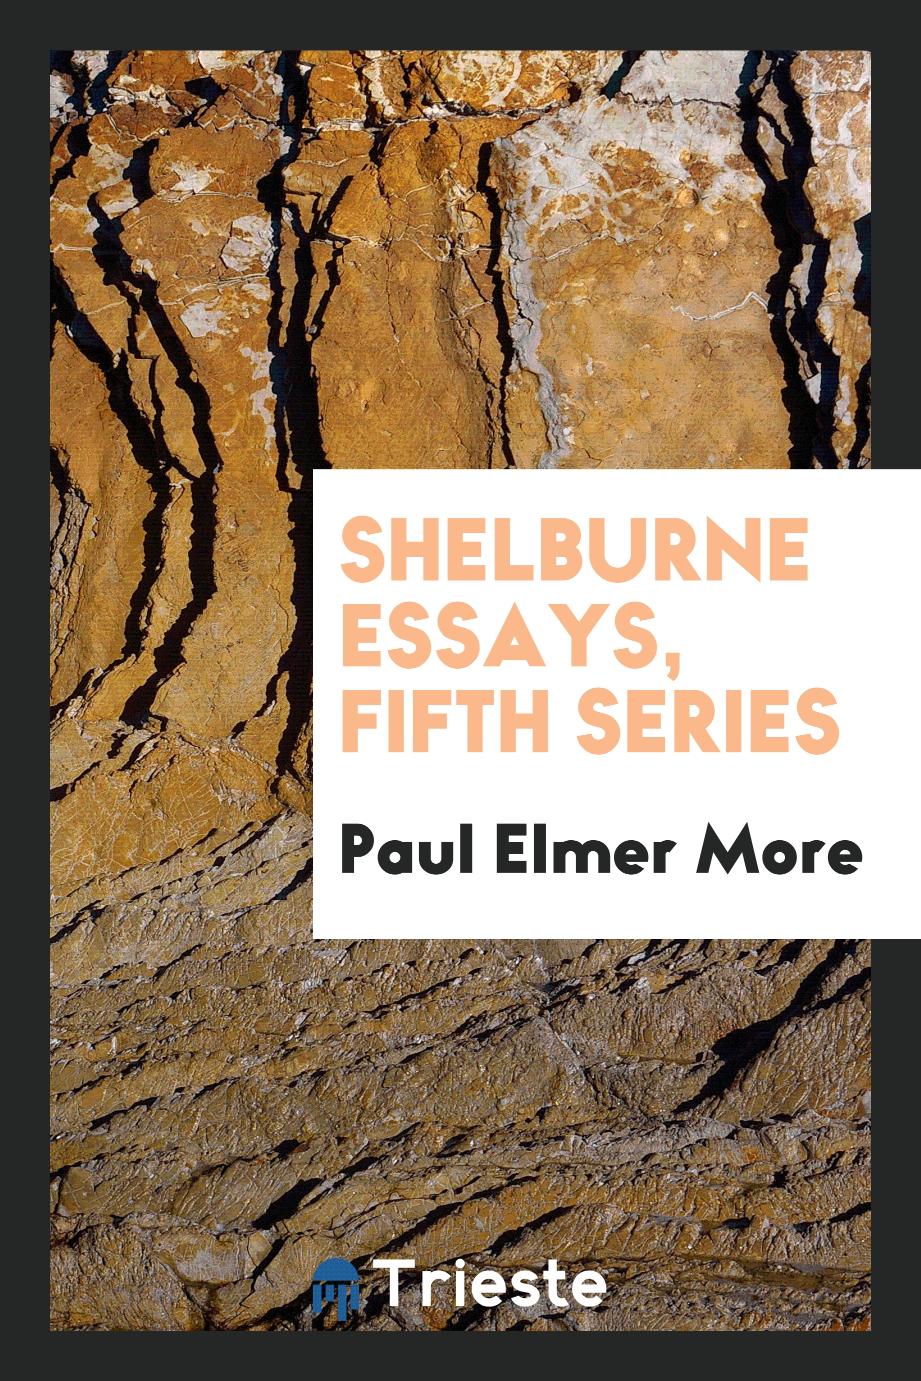 Shelburne essays, fifth series